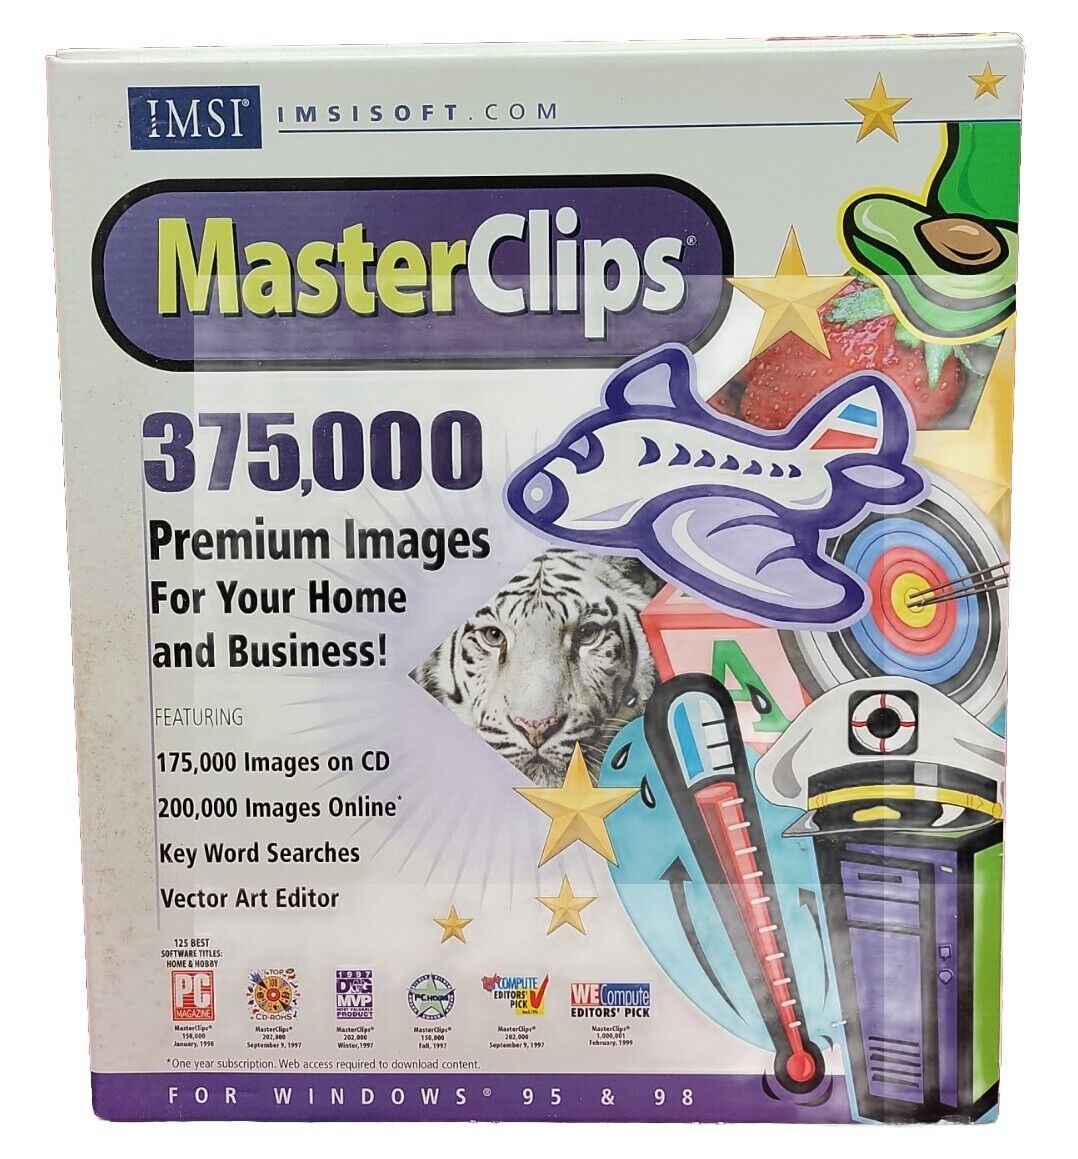 IMSI Masterclips 375,000 Software W/ Image Catalogue & Instructions Nib New